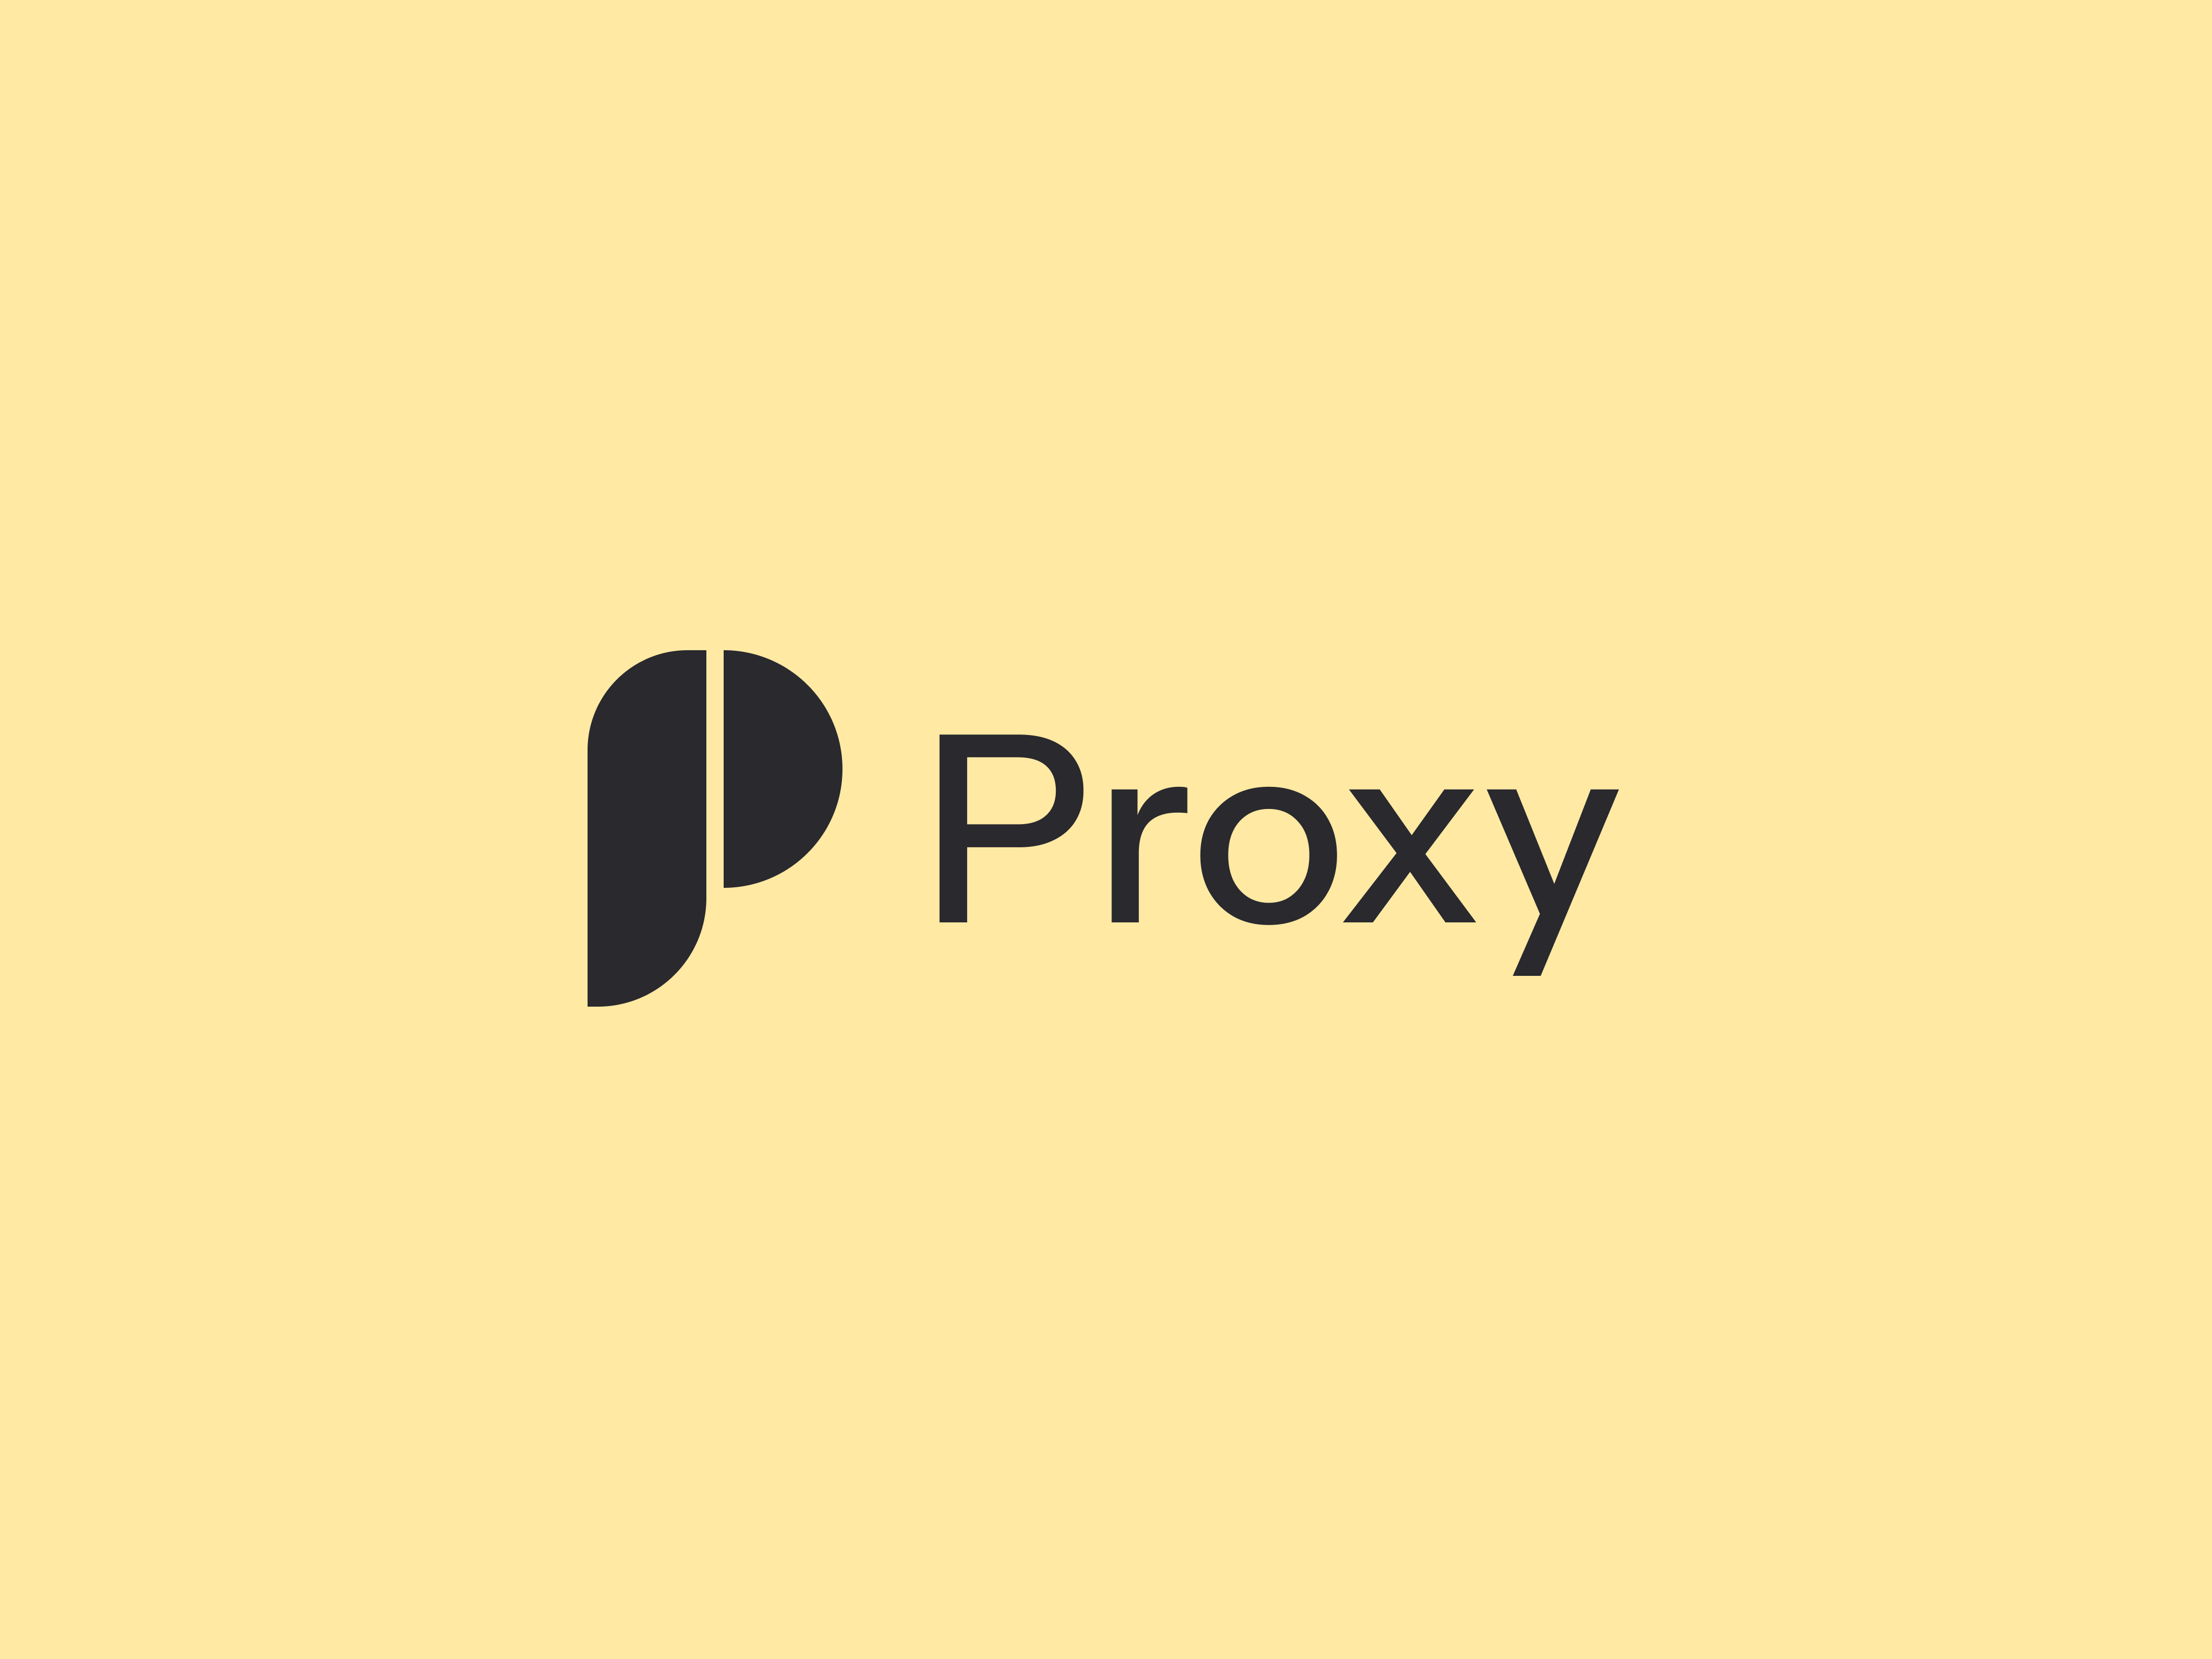 Proxxy, Inc. company logo